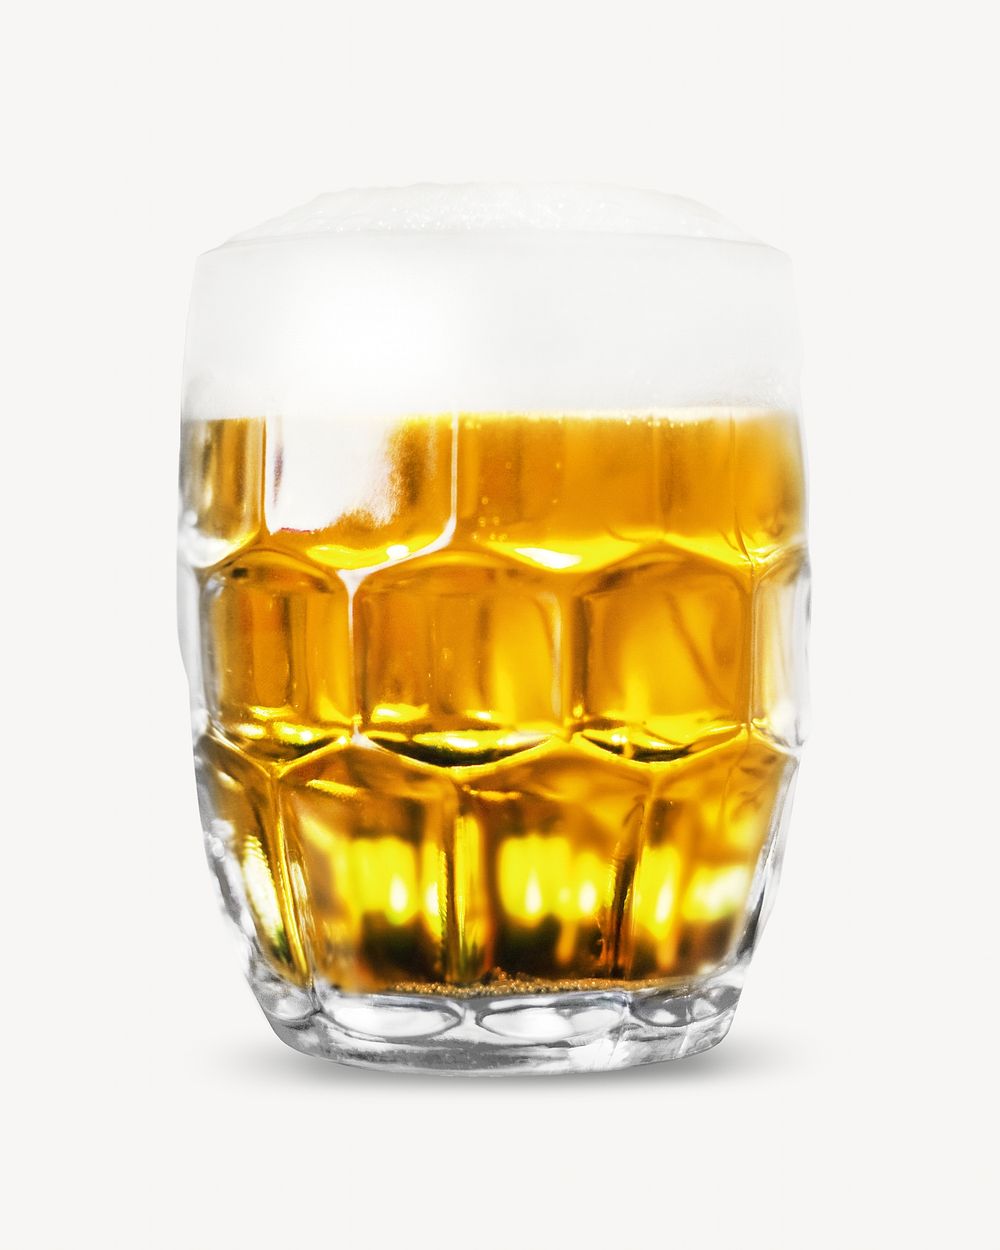 Glass of beer beverage image element.